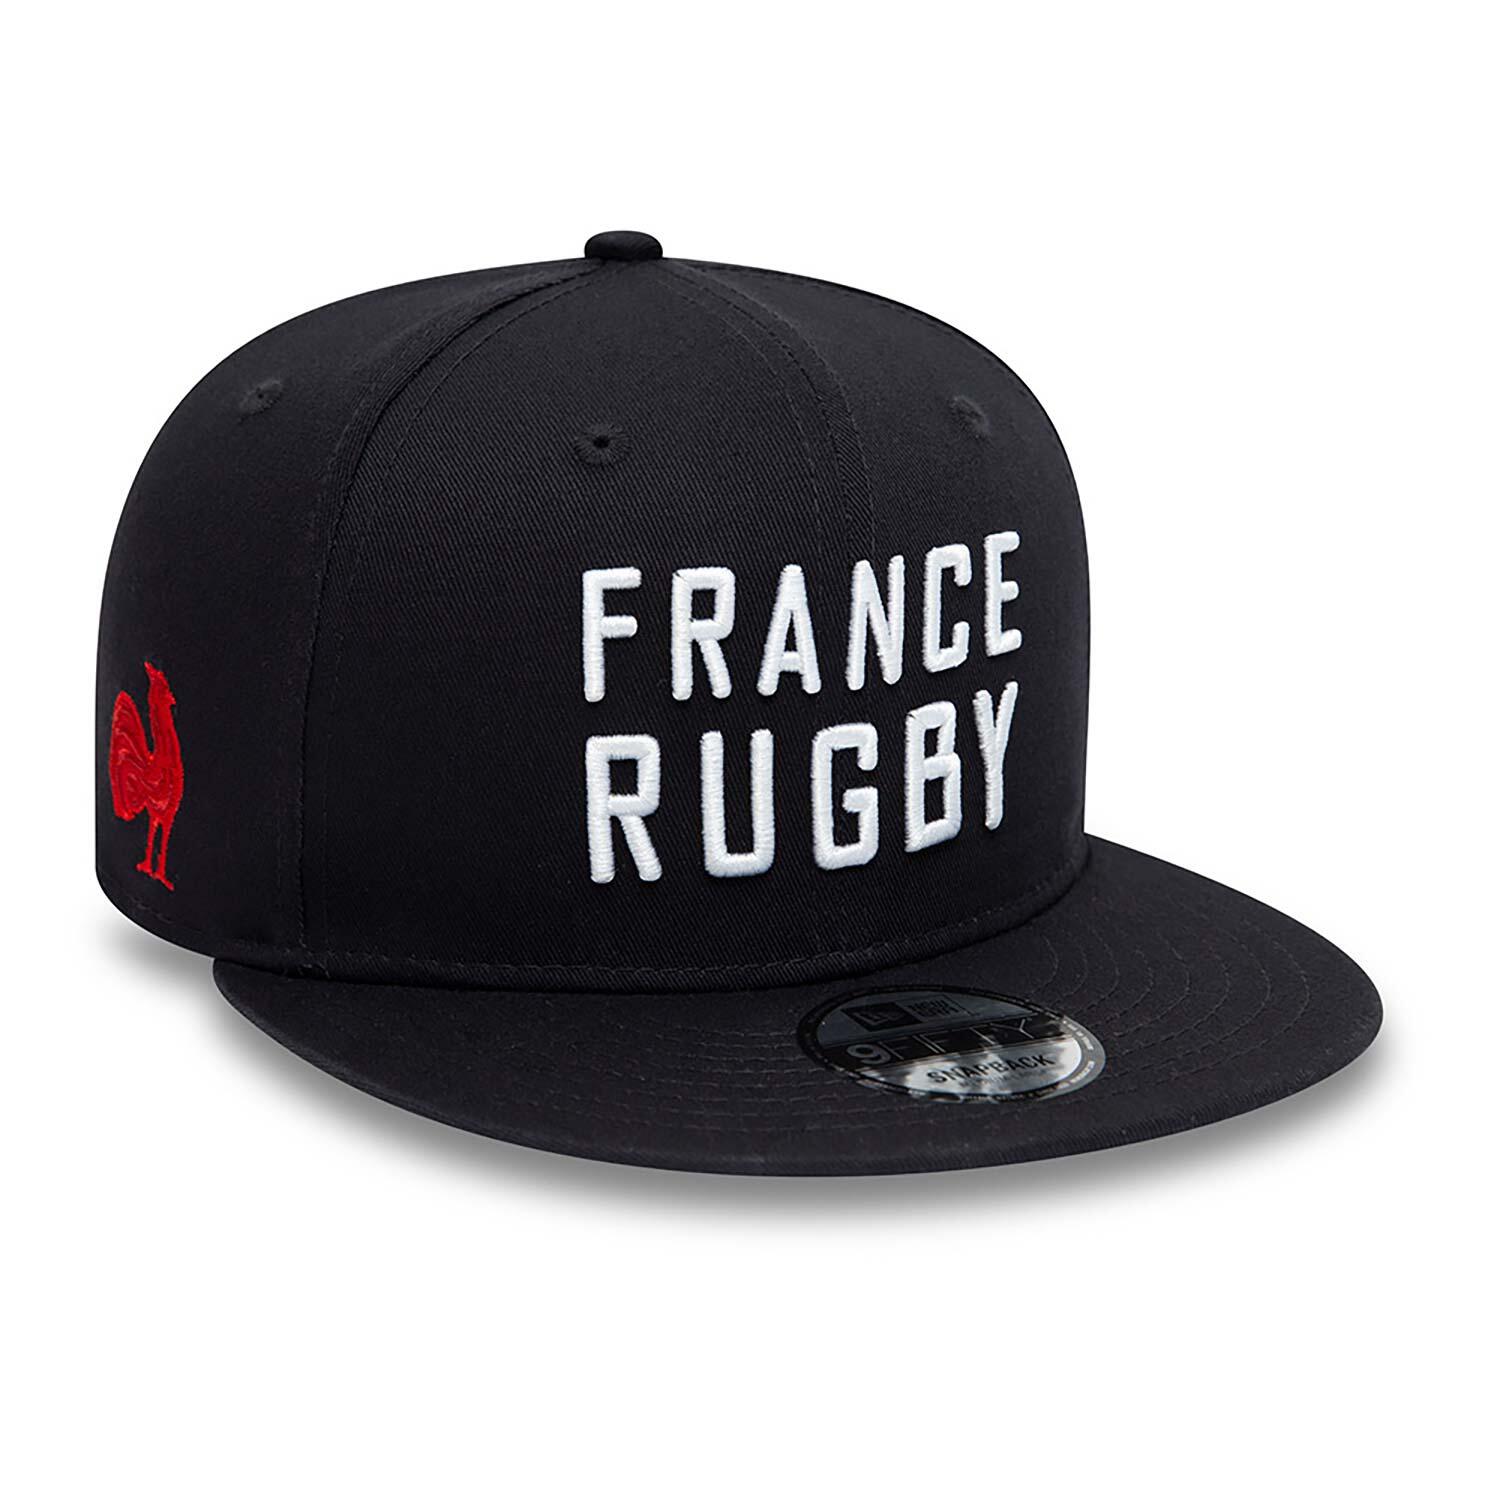 NEW ERA New Era France Rugby 9FIFTY Snapback Navy